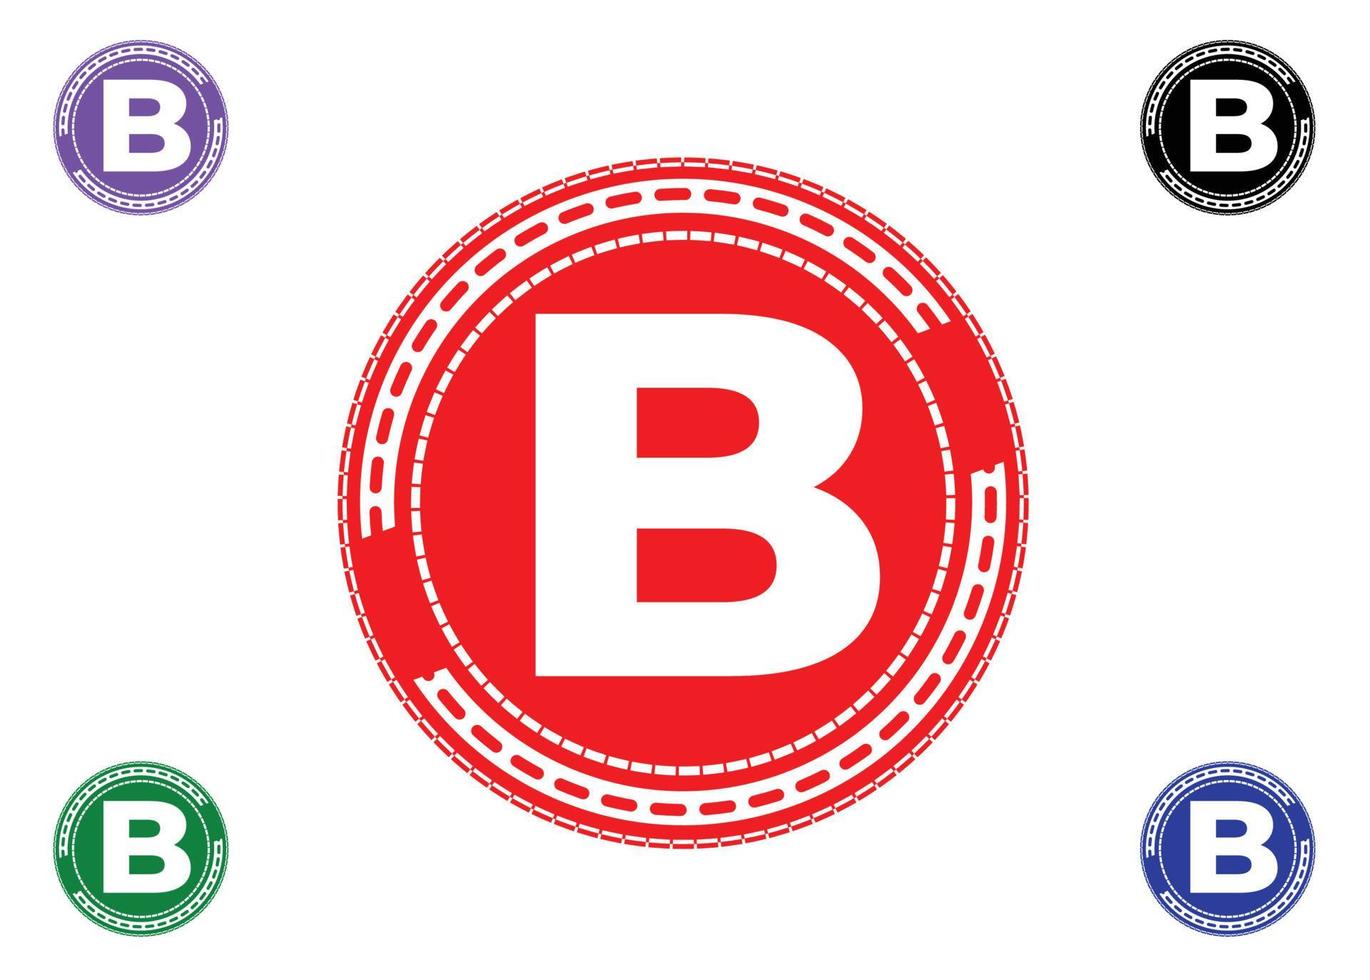 b letter logo en pictogram ontwerpsjabloon vector